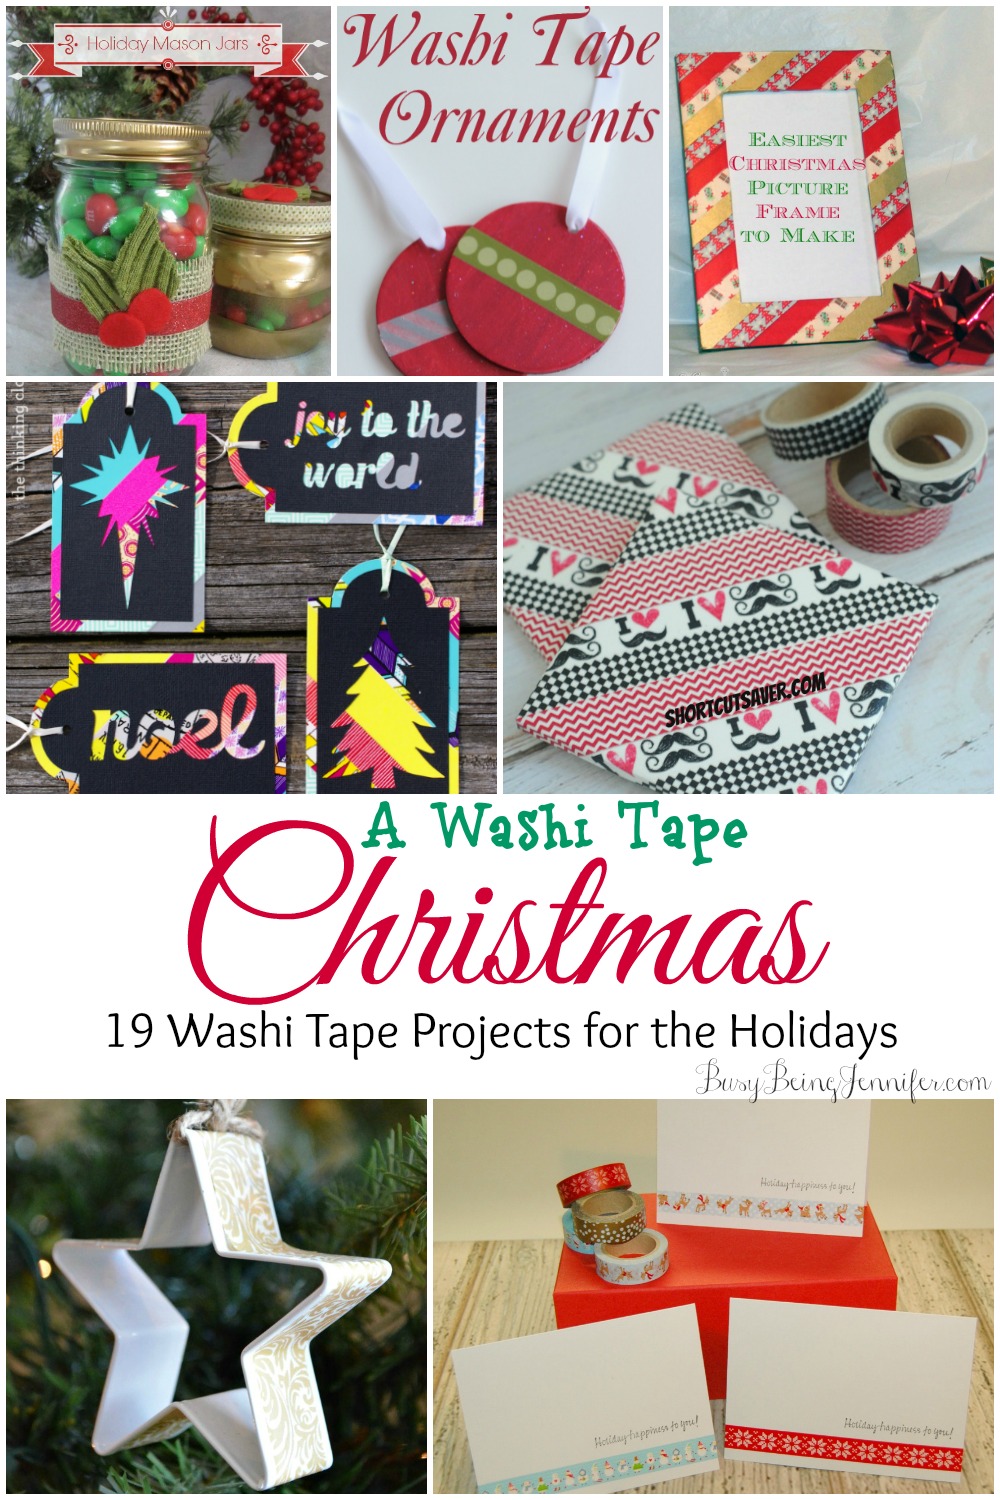 A Washi Tape Christmas - Busy Being Jennifer